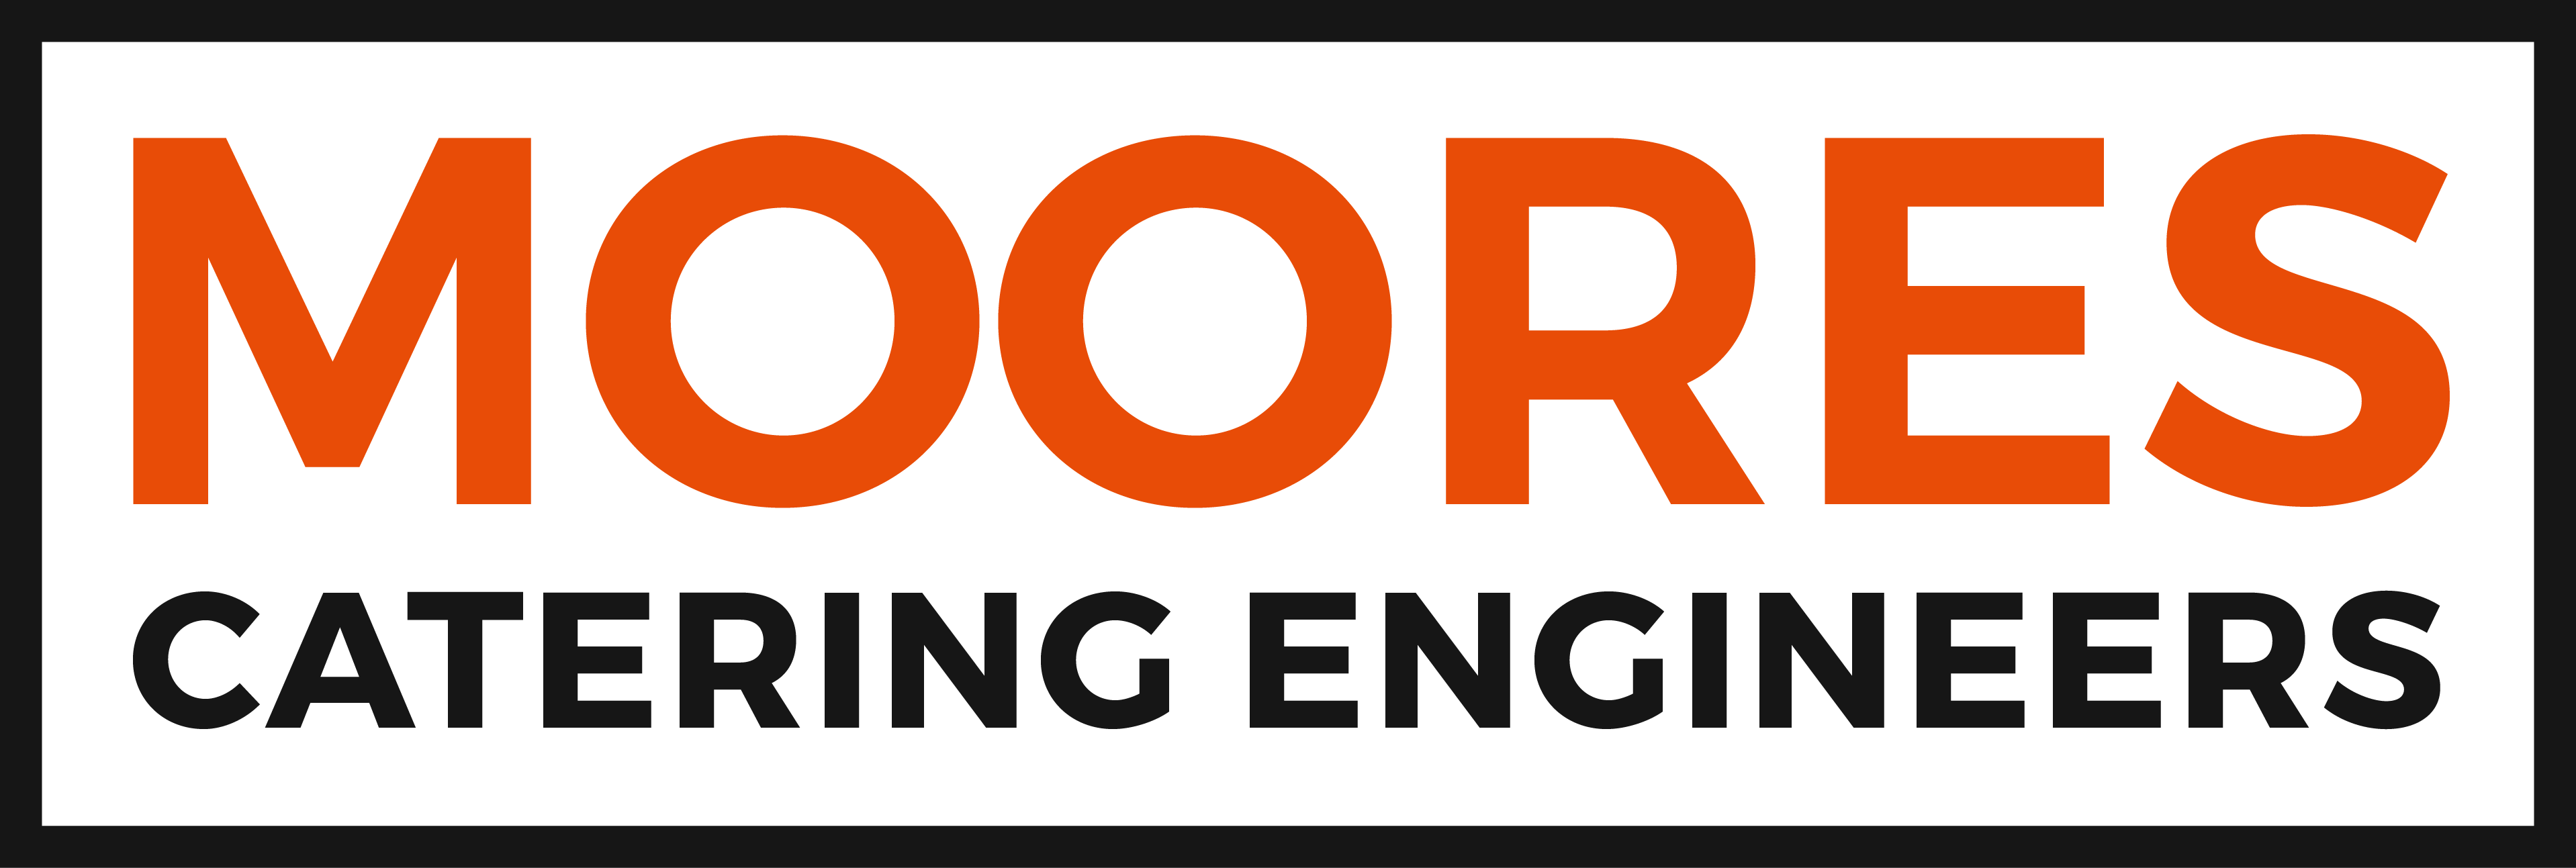 Moore's Catering Engineers logo